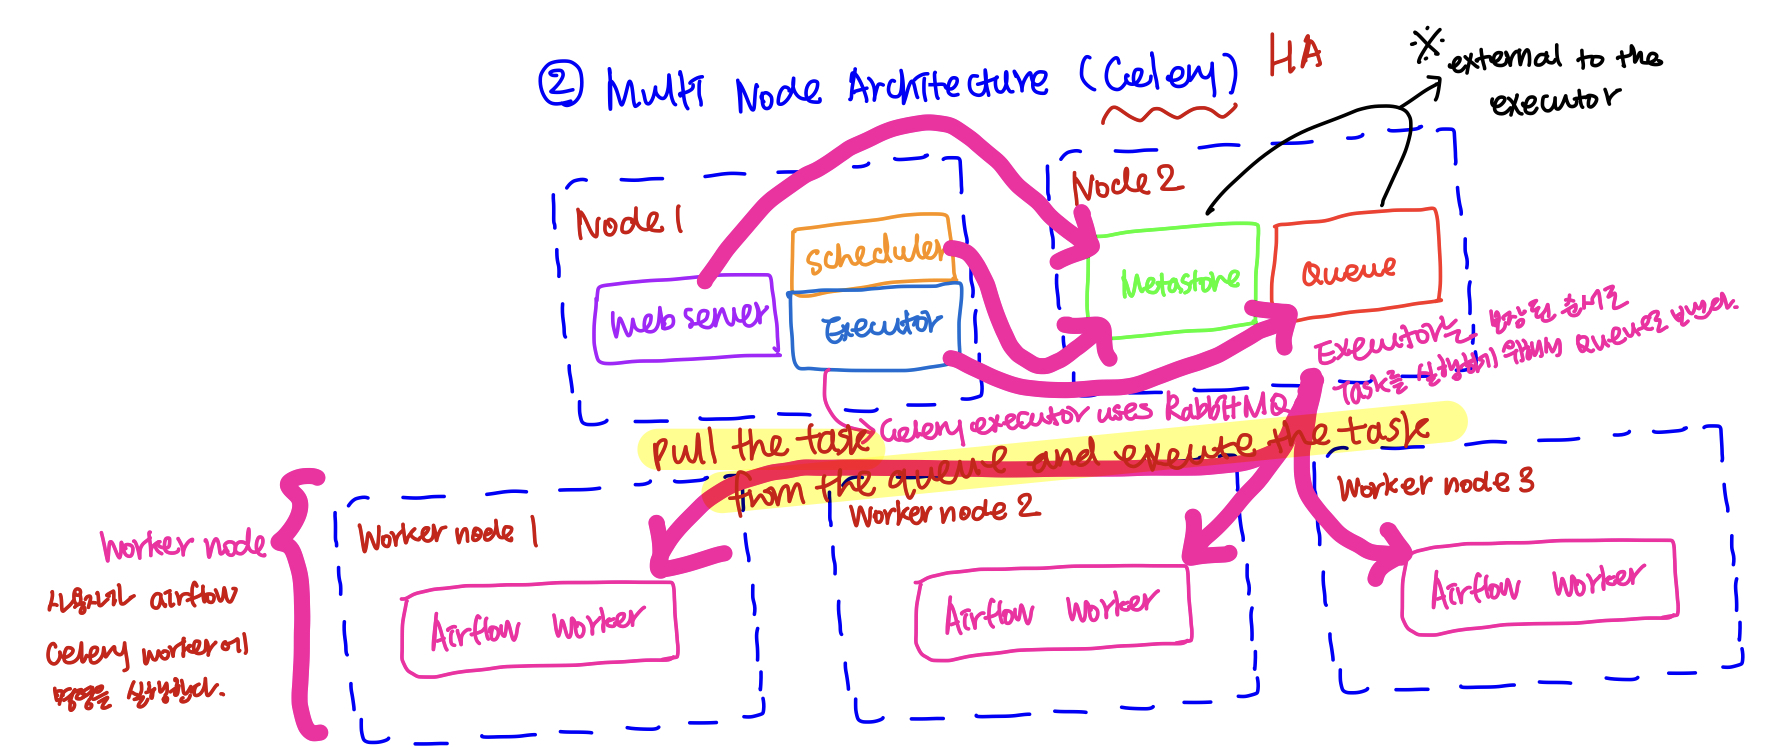 Apache Airflow Multi Node Architecture